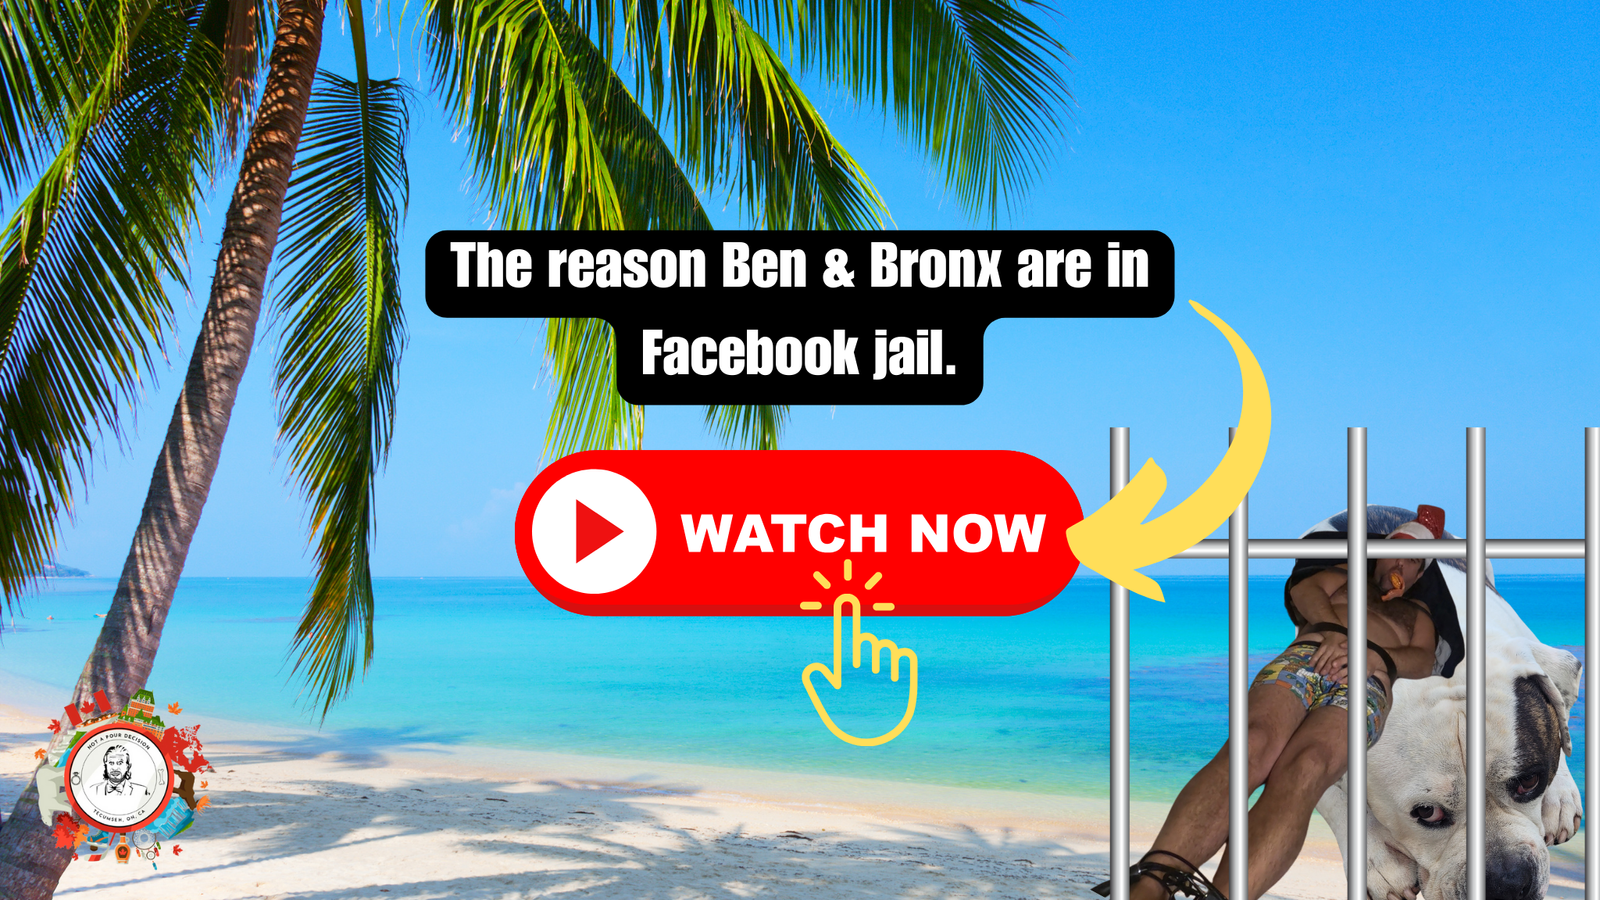 Ben's Facebook jail visit - WHY?